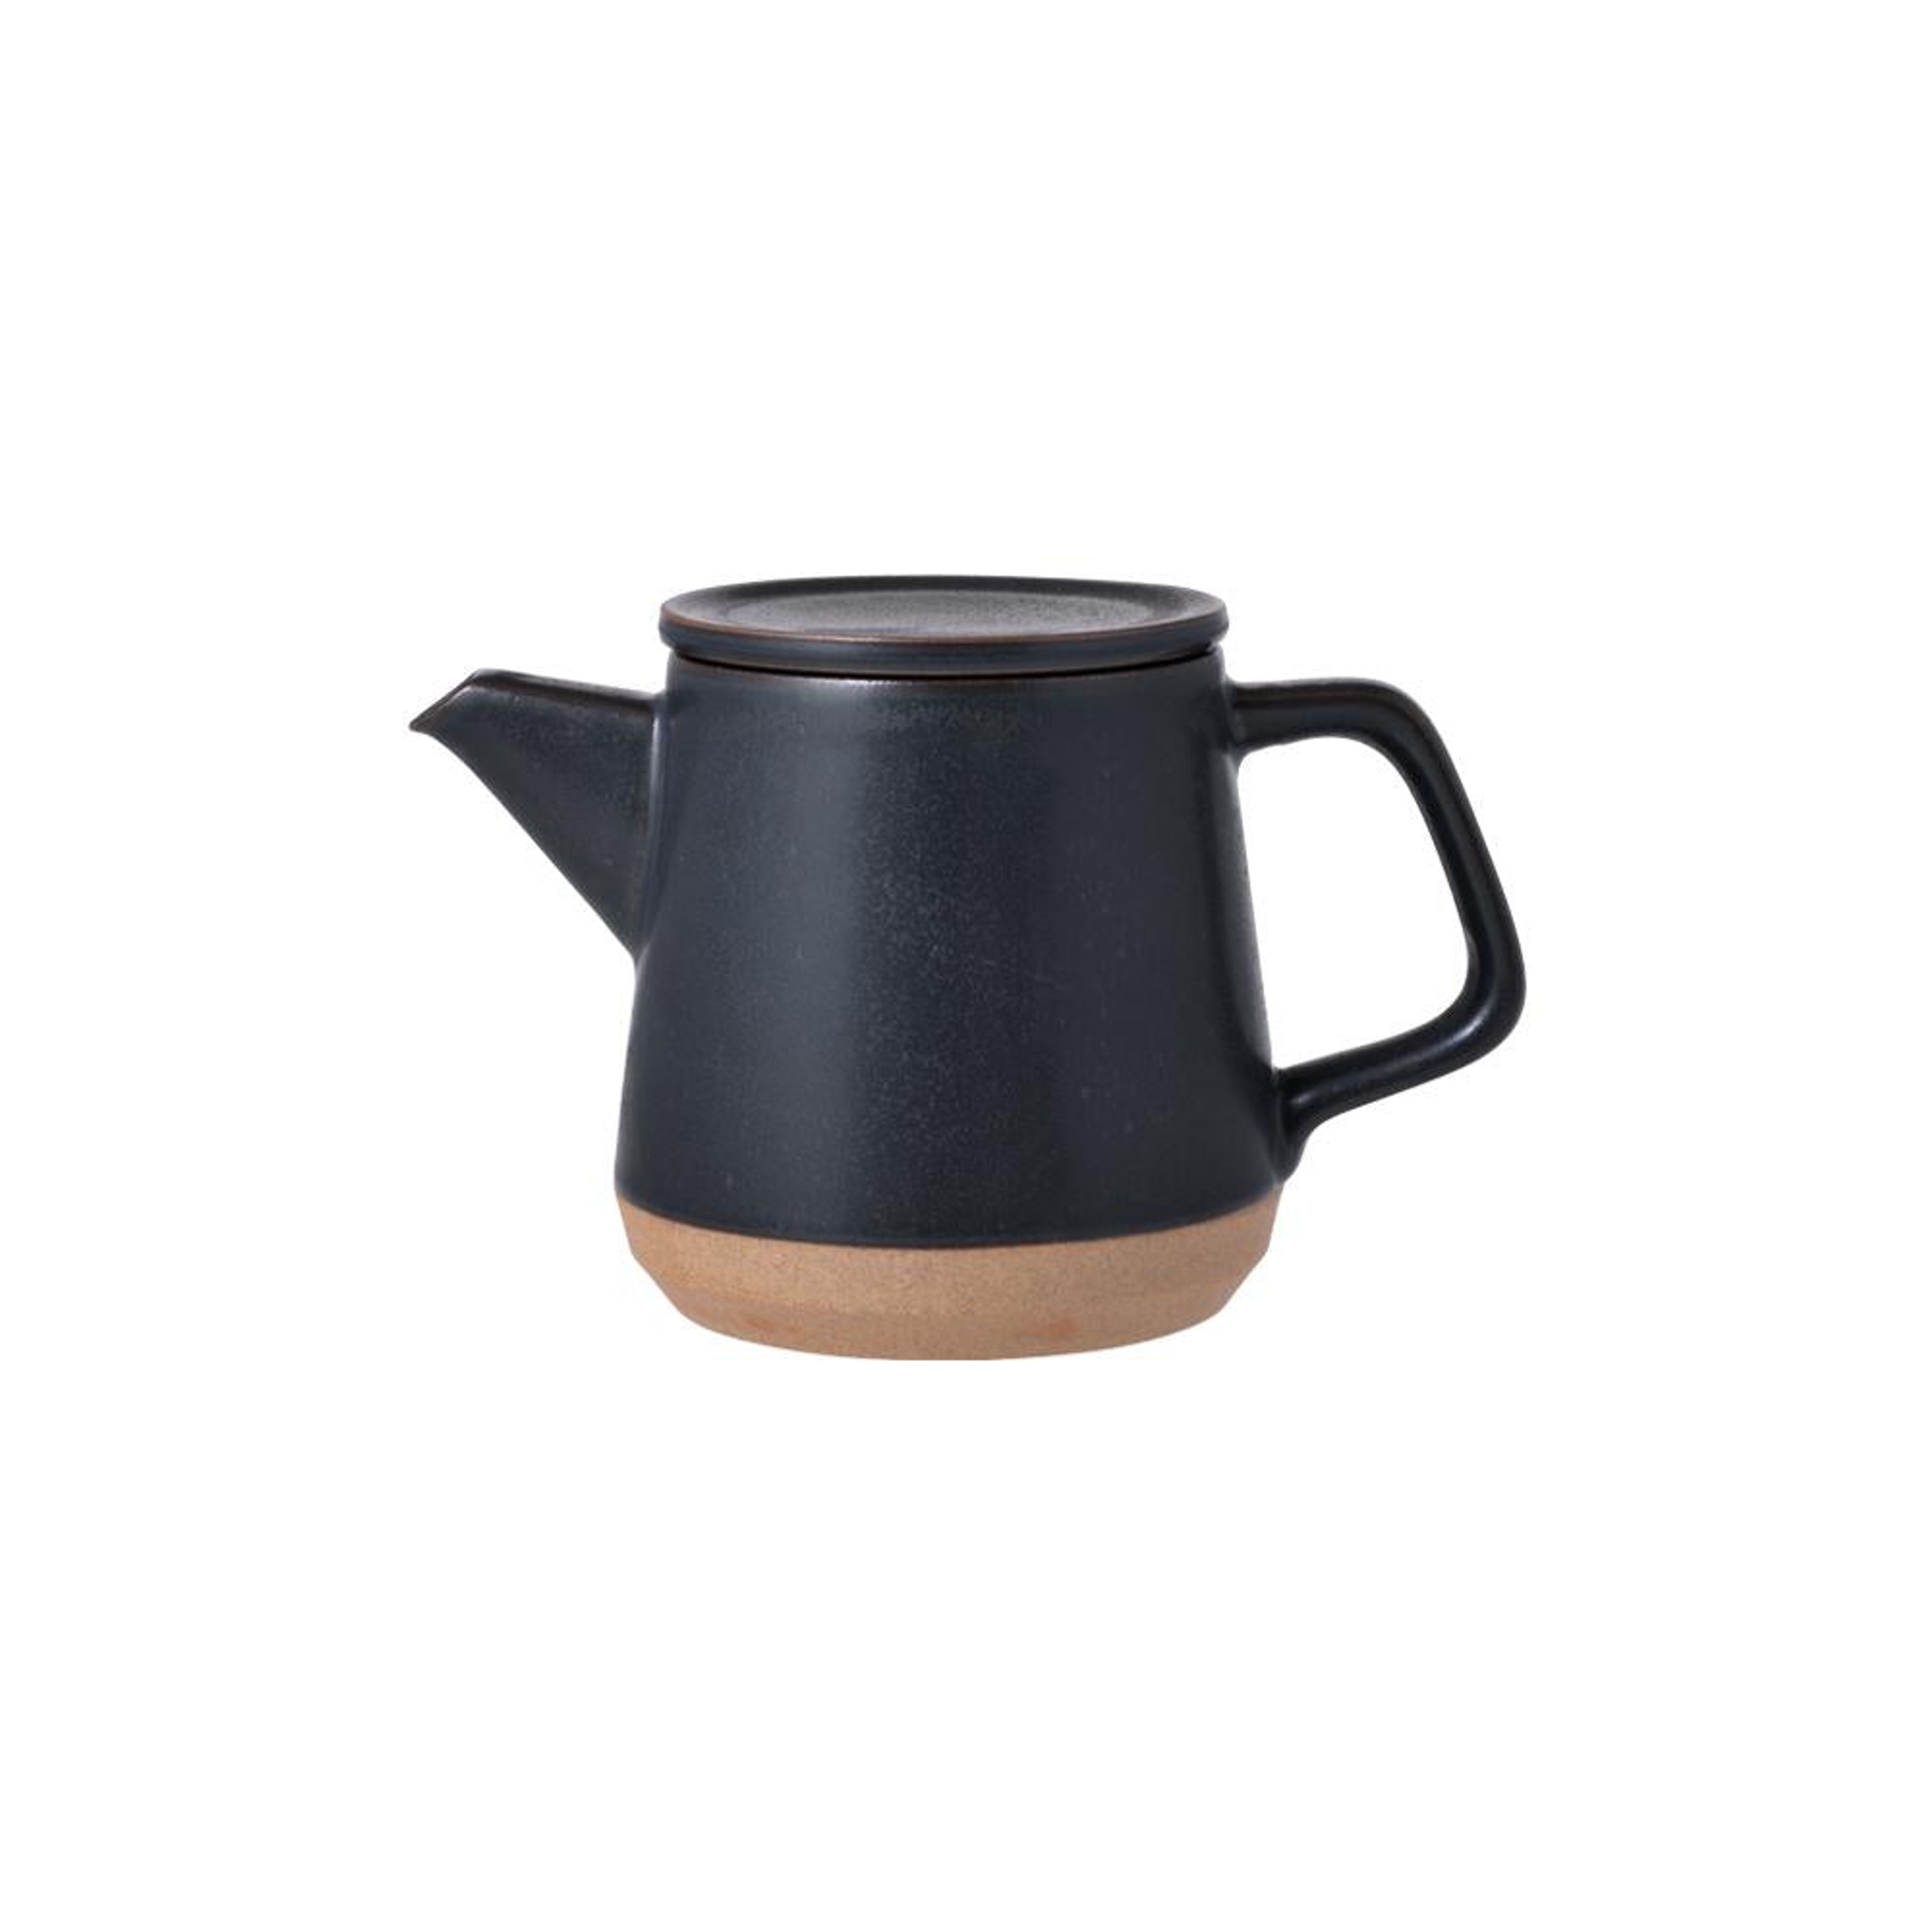 CLK-151 teapot 500ml